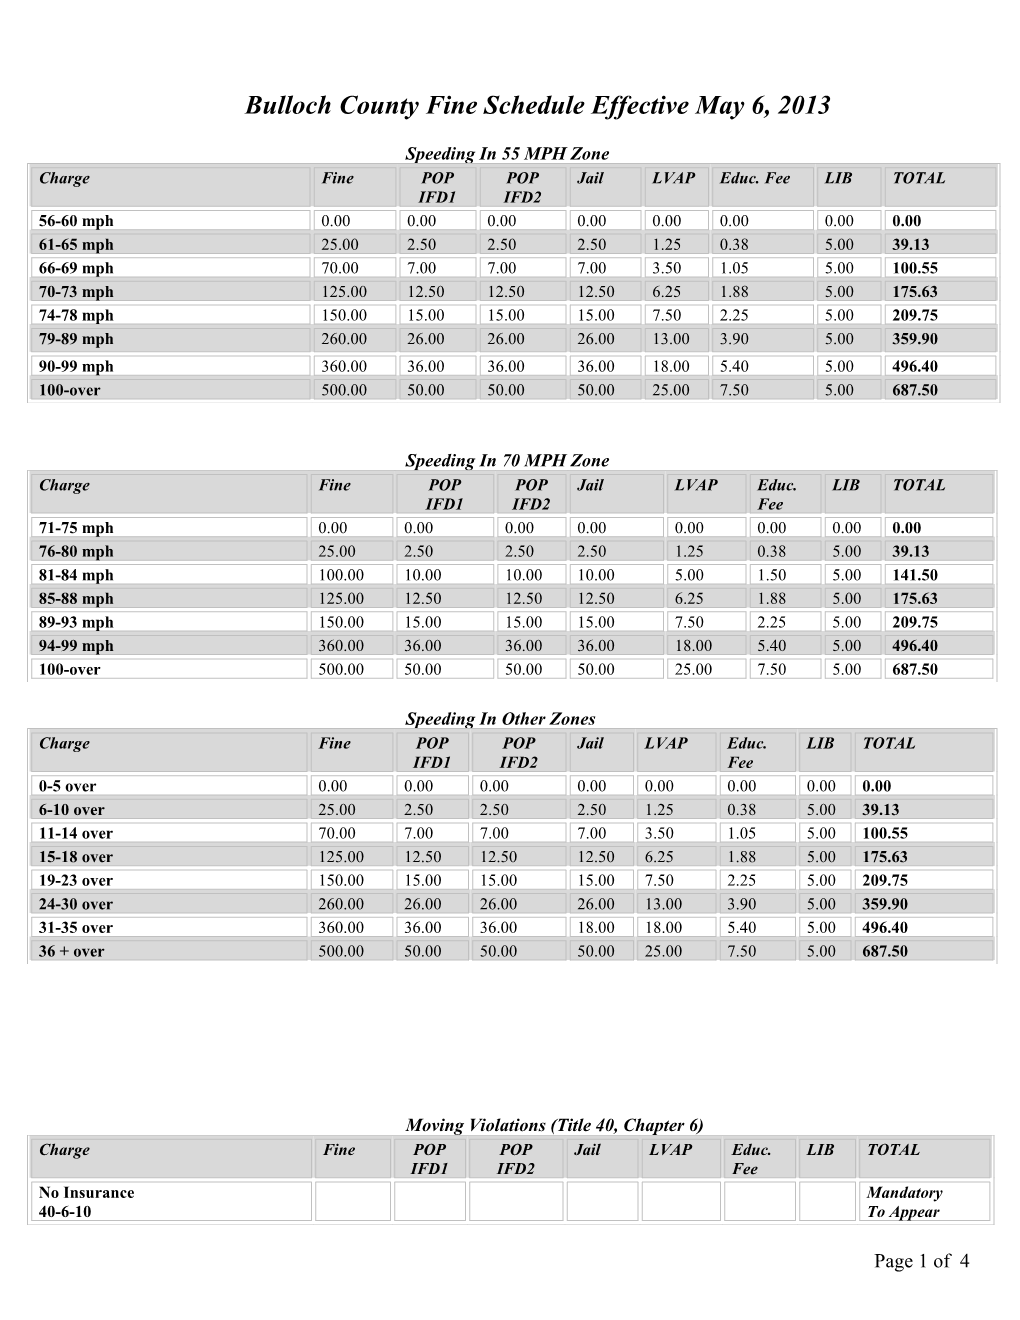 Bulloch County Fine Schedule Effective April 11, 2008